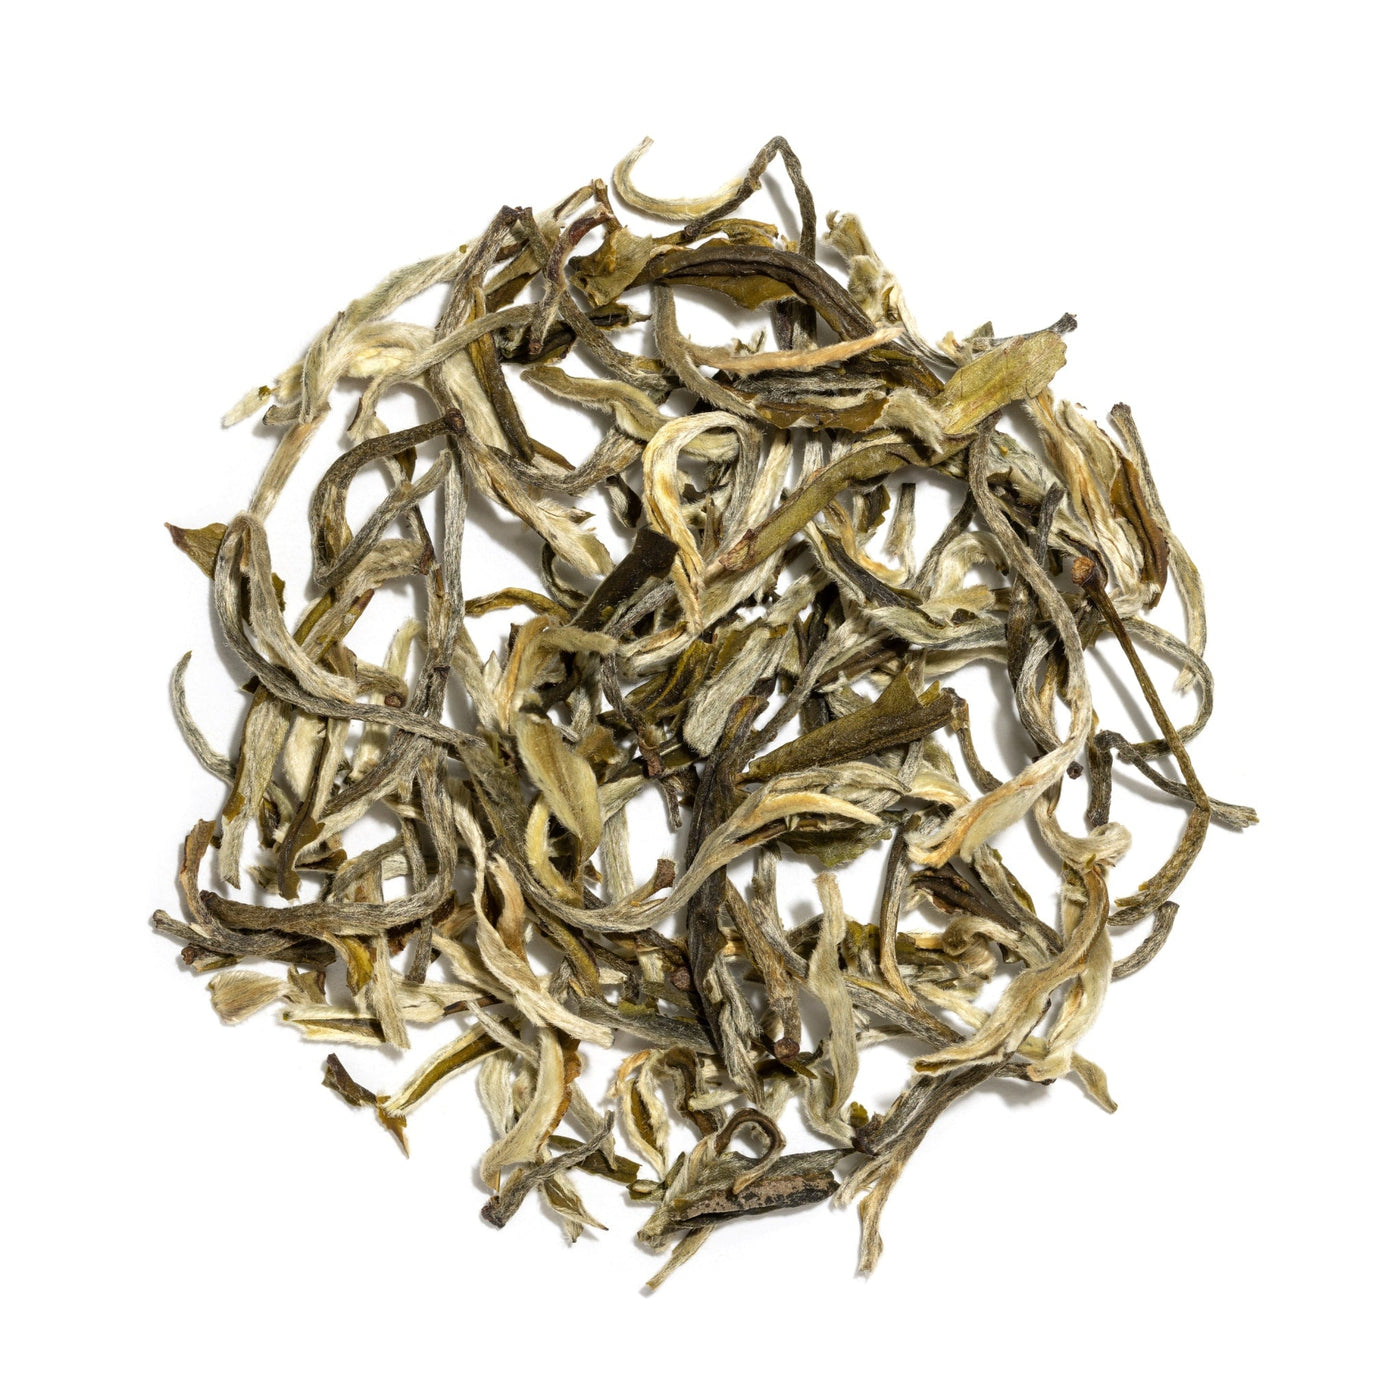 China WHITE MONKEY PEKOE 40g - Loose Leaf Tea